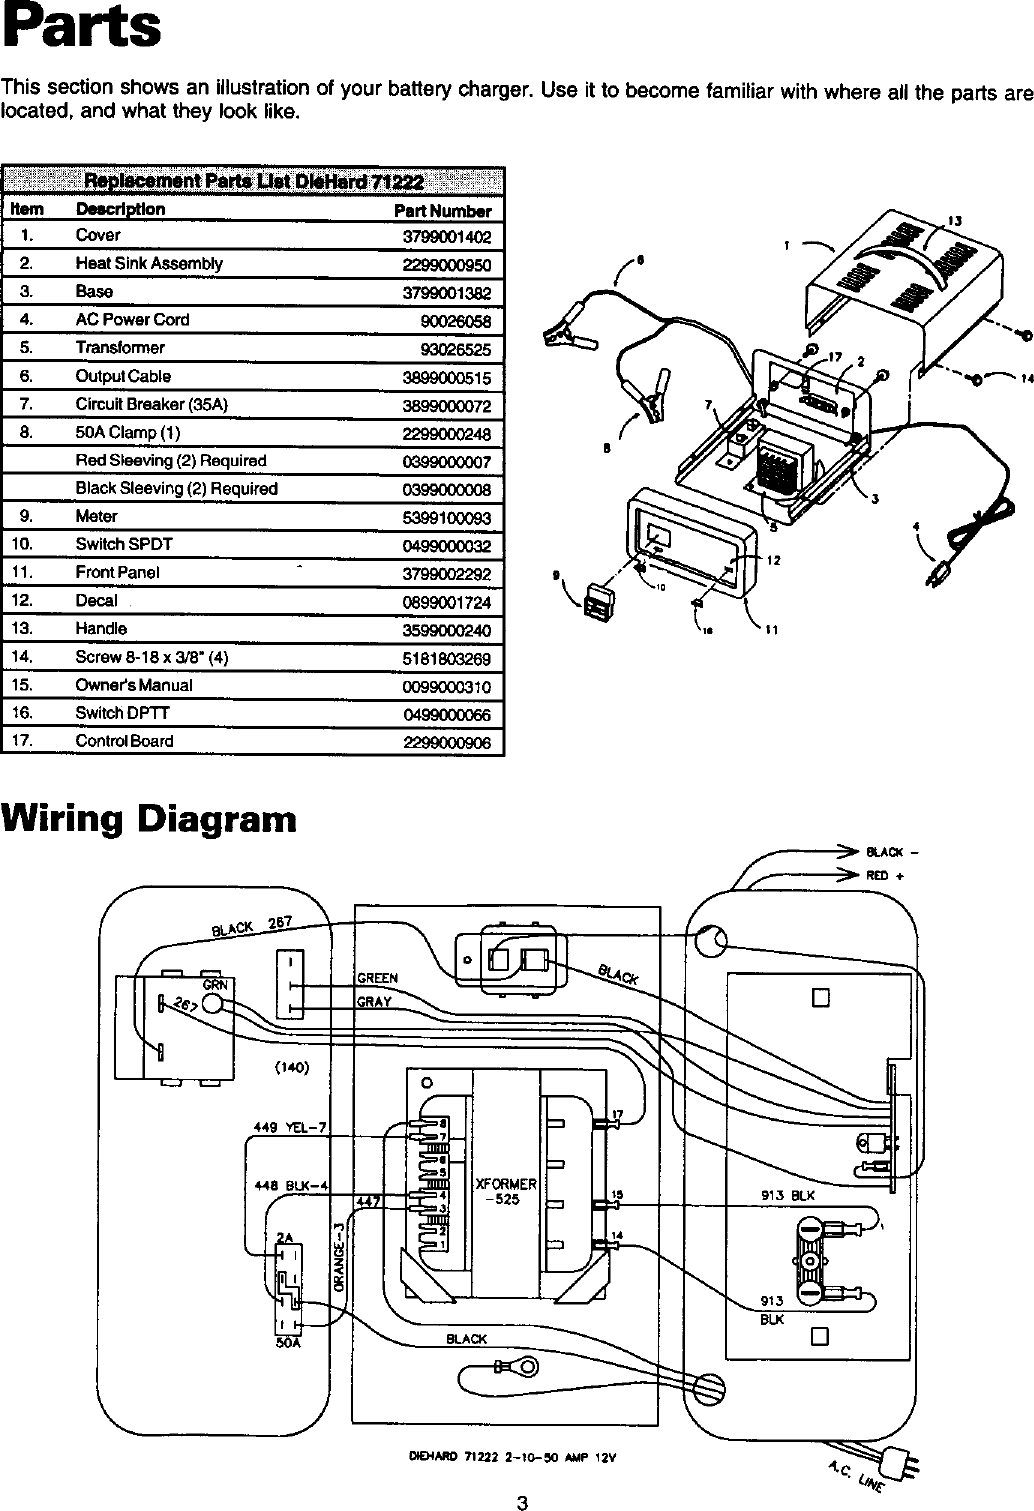 Diehard Battery Charger Wiring Diagram